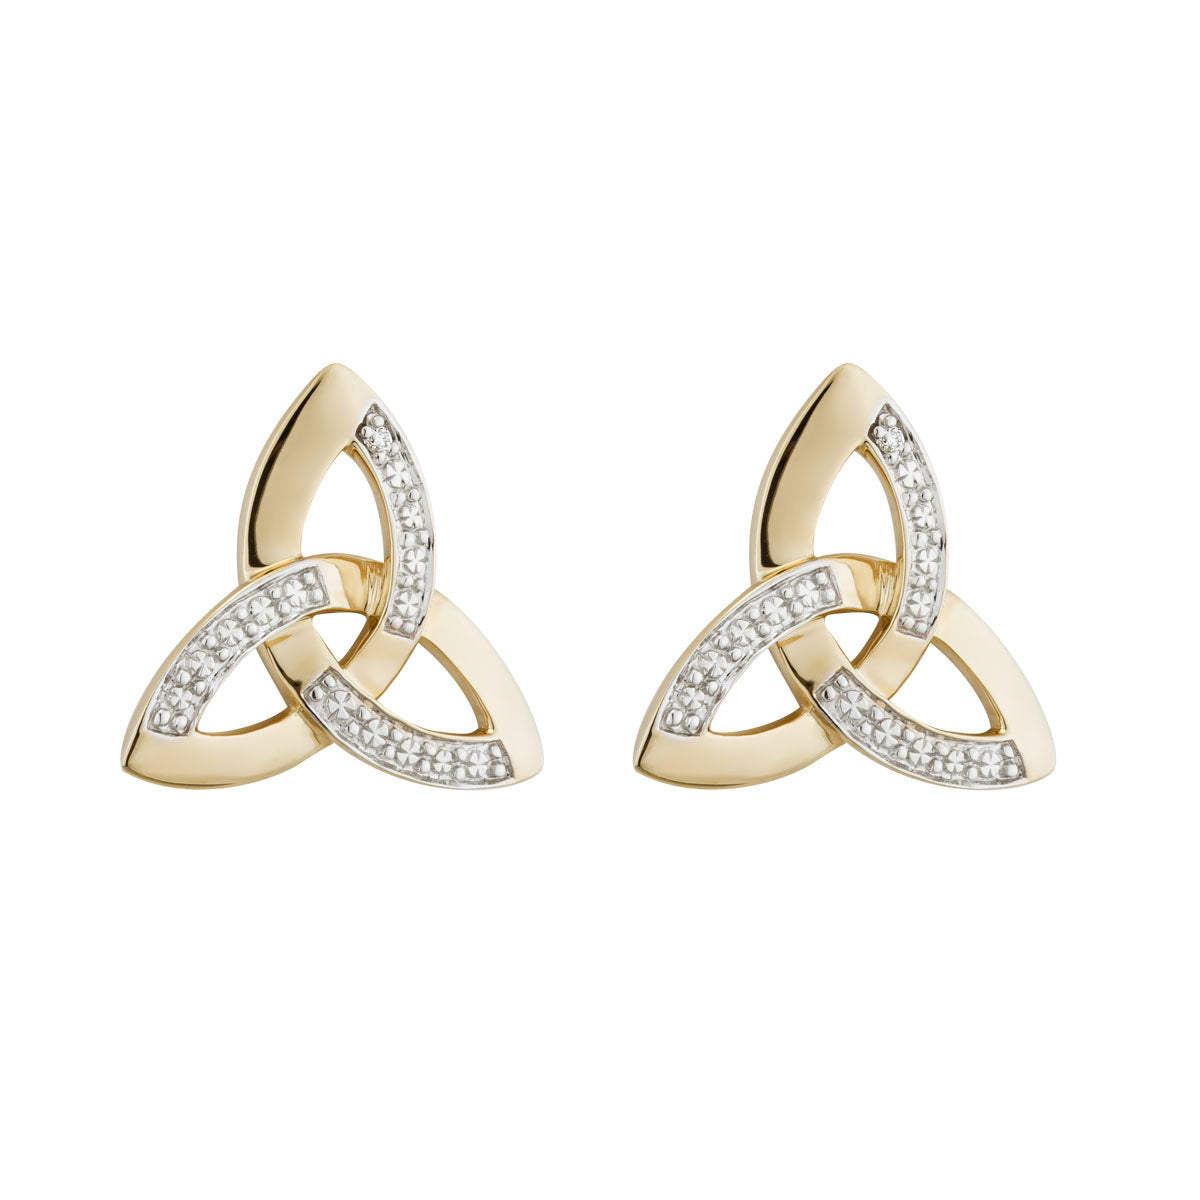 14K two tone gold diamond trinity knot stud earrings s33104 from Solvar